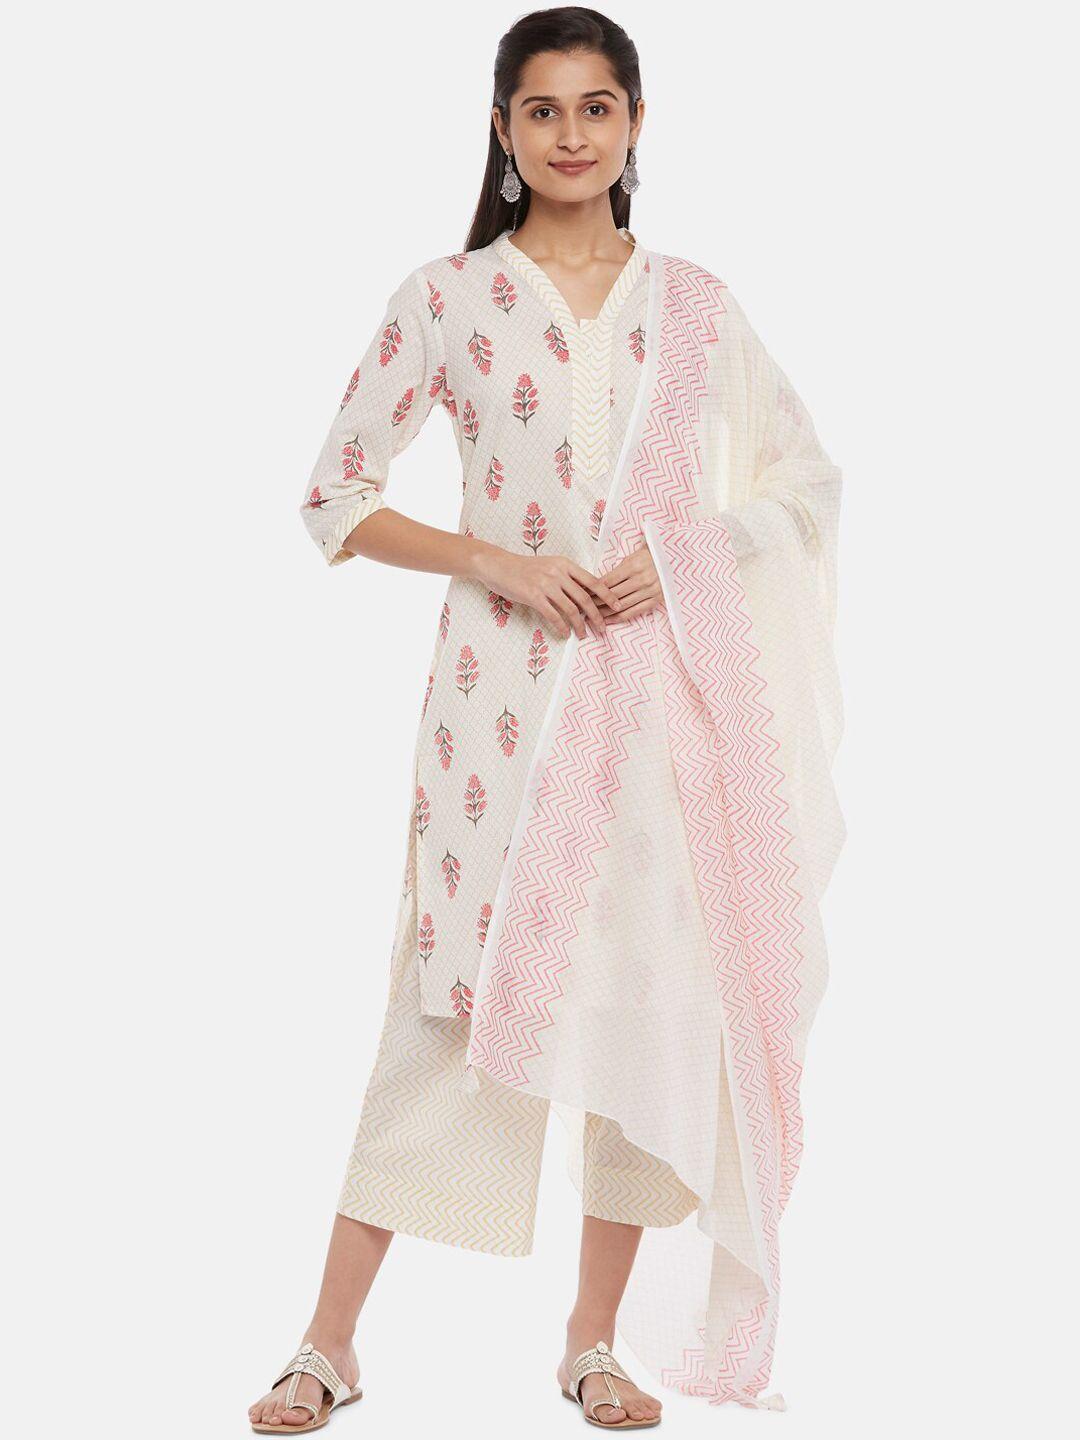 rangmanch by pantaloons women off white ethnic motifs printed kurta set